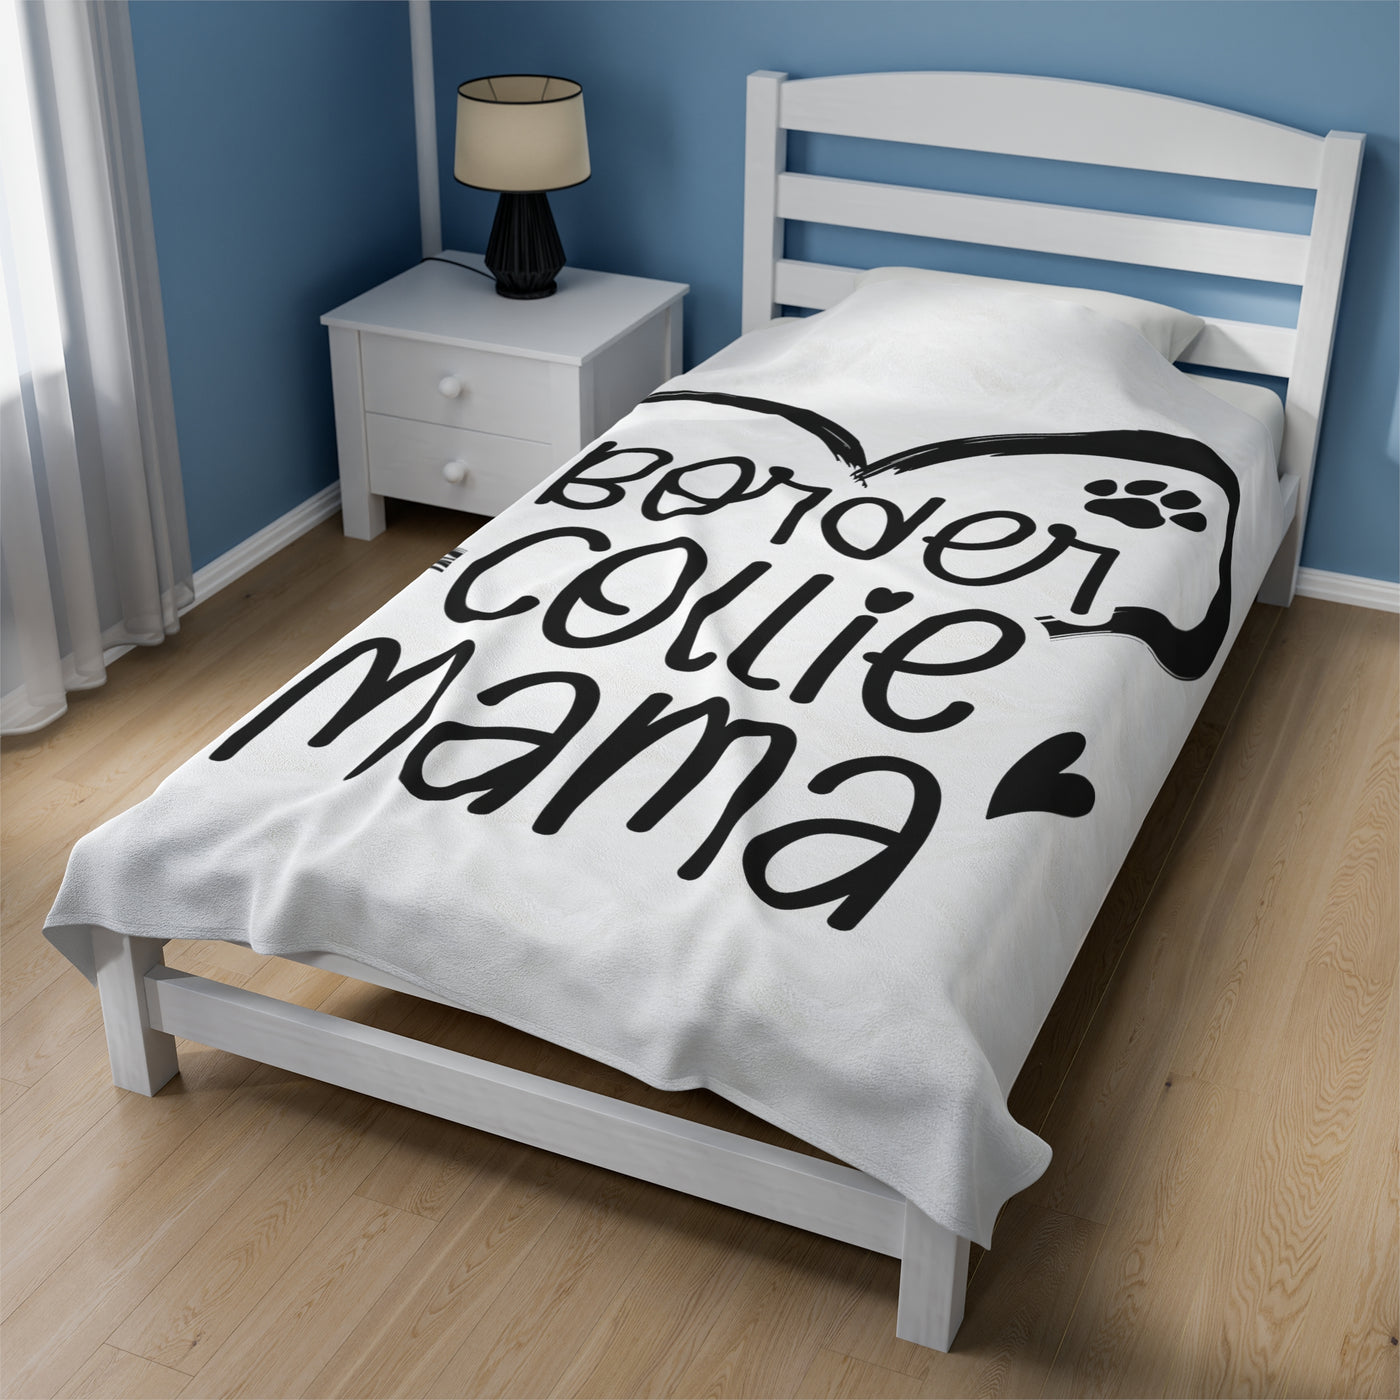 Border Collie Mama Blanket